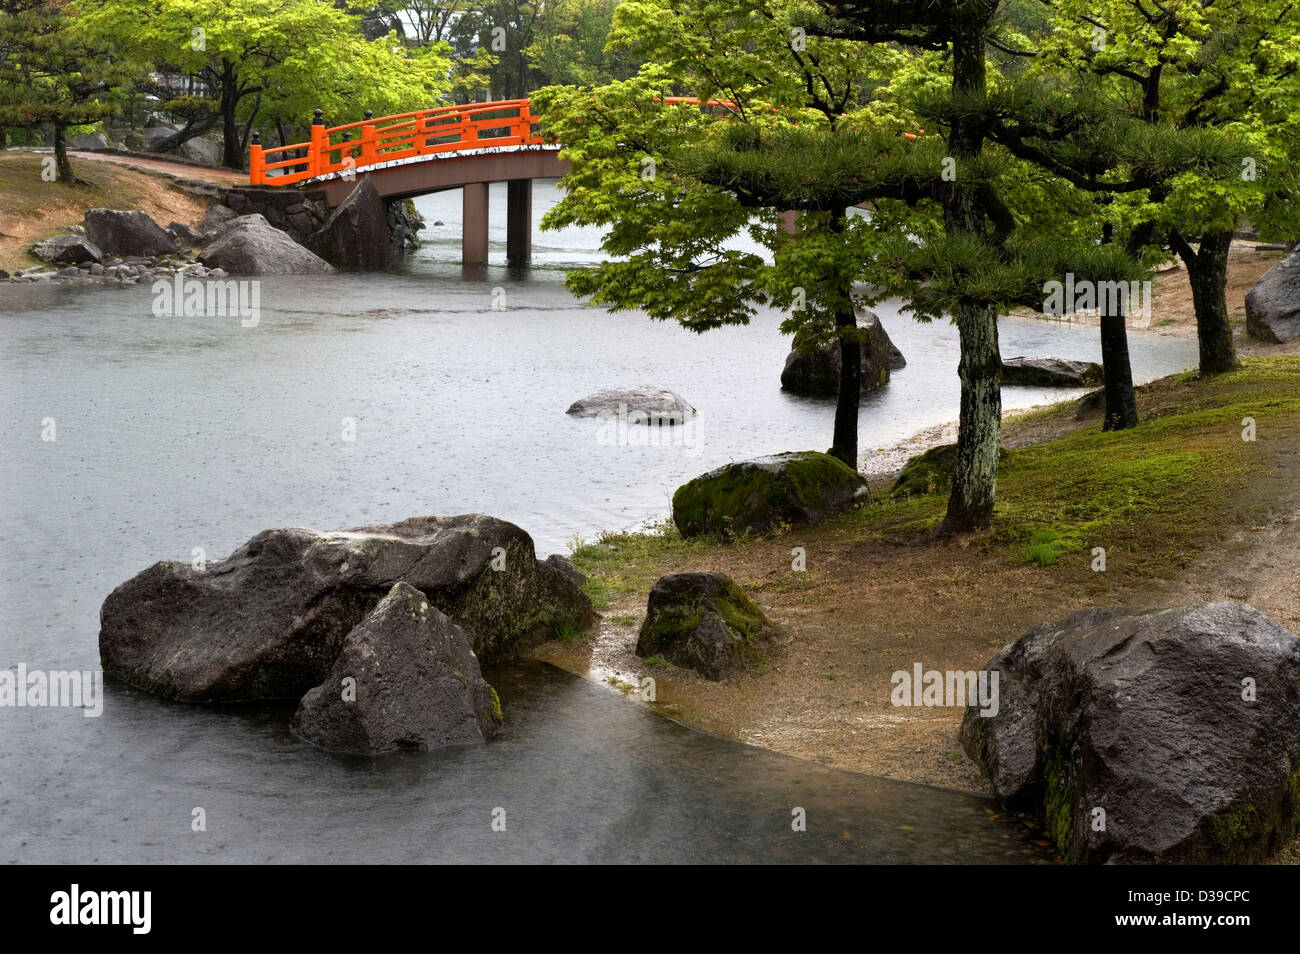 Shikibu Murashiki Koen park orange ponte ad arco oltre il giardino giapponese stagno in una piovosa, giornata di primavera. Foto Stock